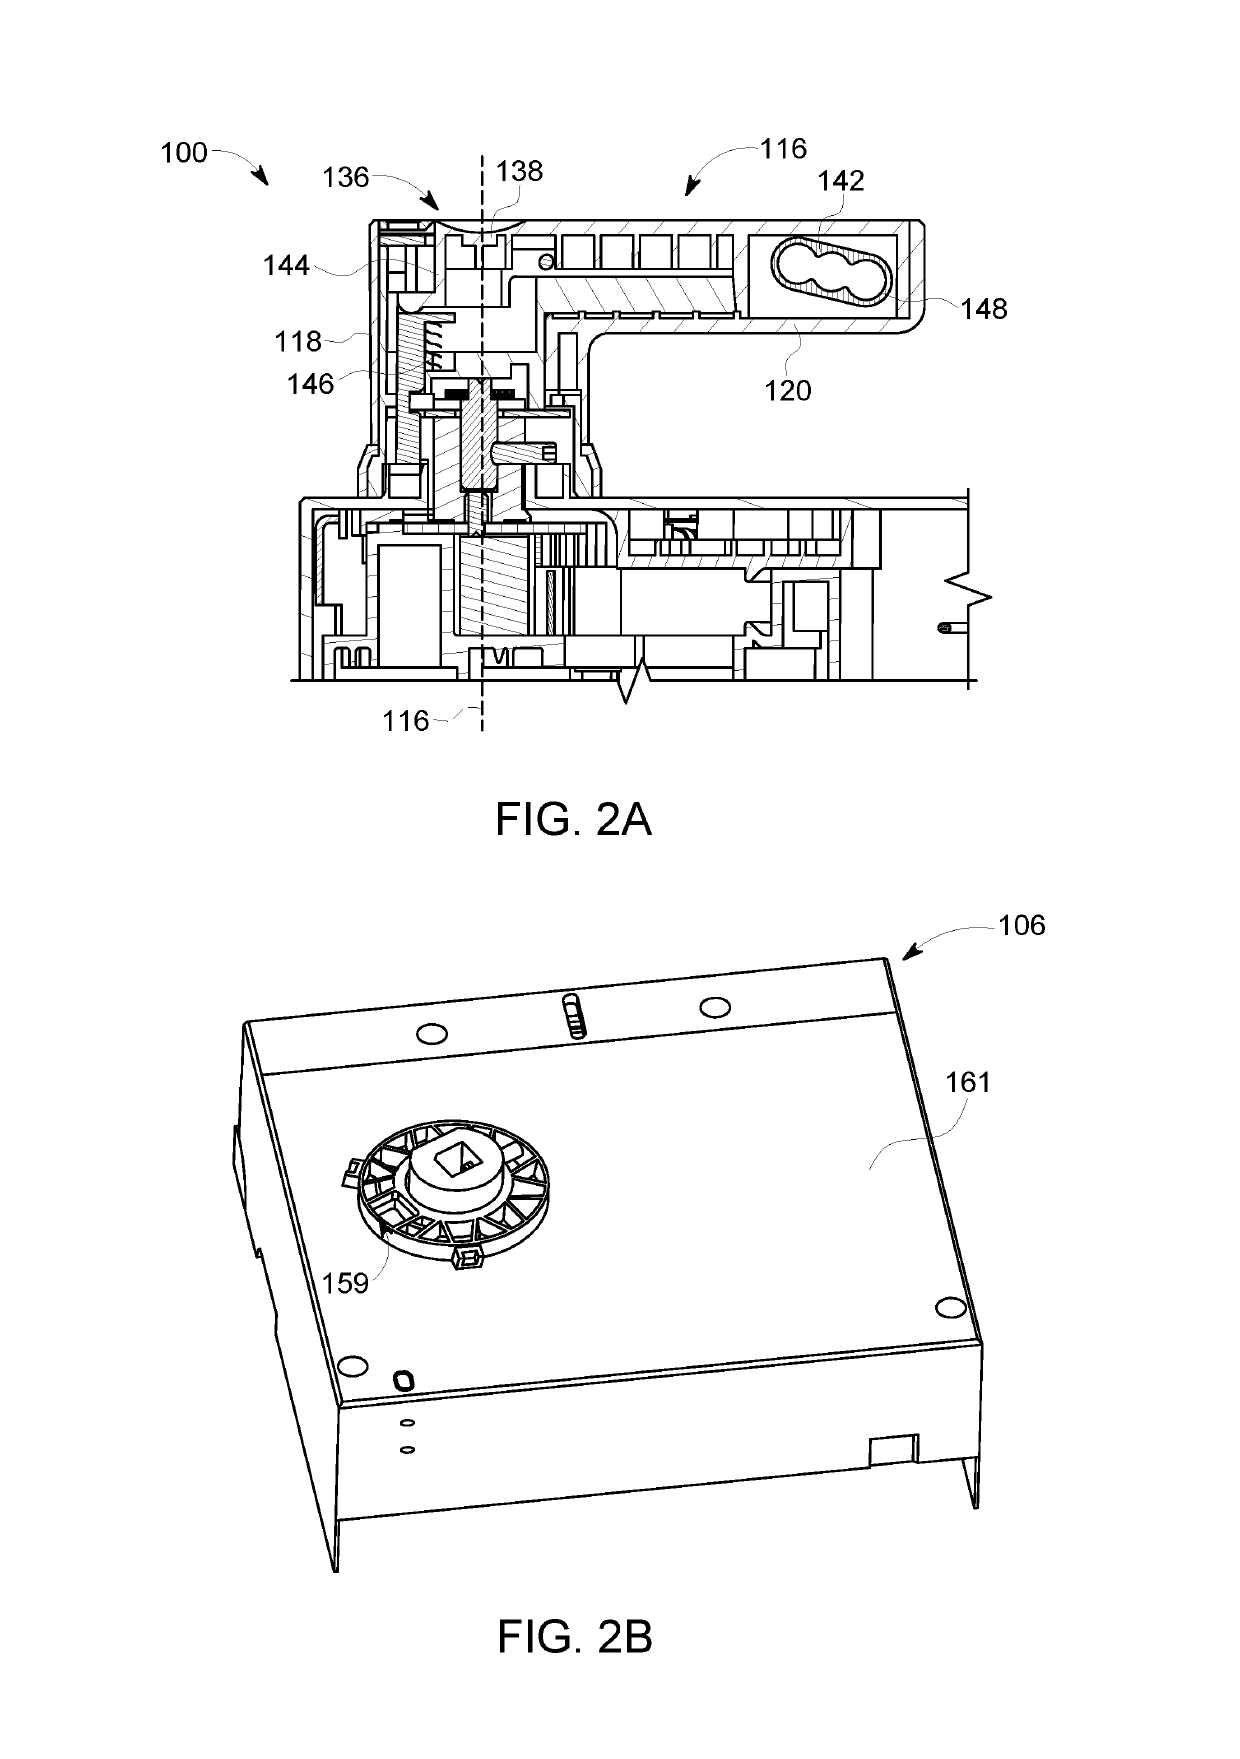 Circuit breaker including rotary handle